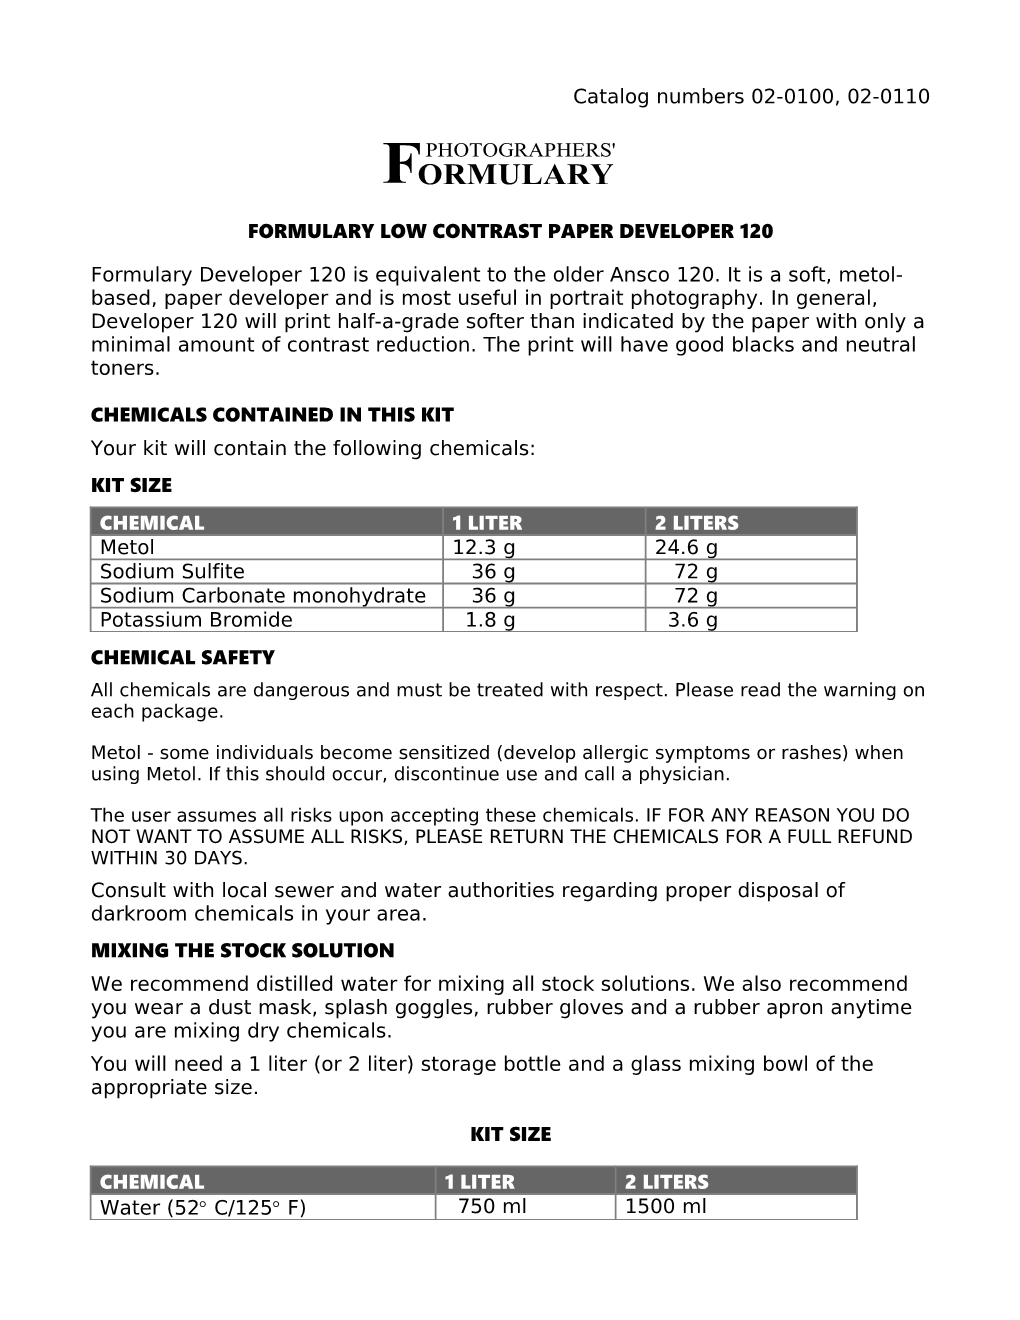 Formulary Low Contrast Paper Developer 120